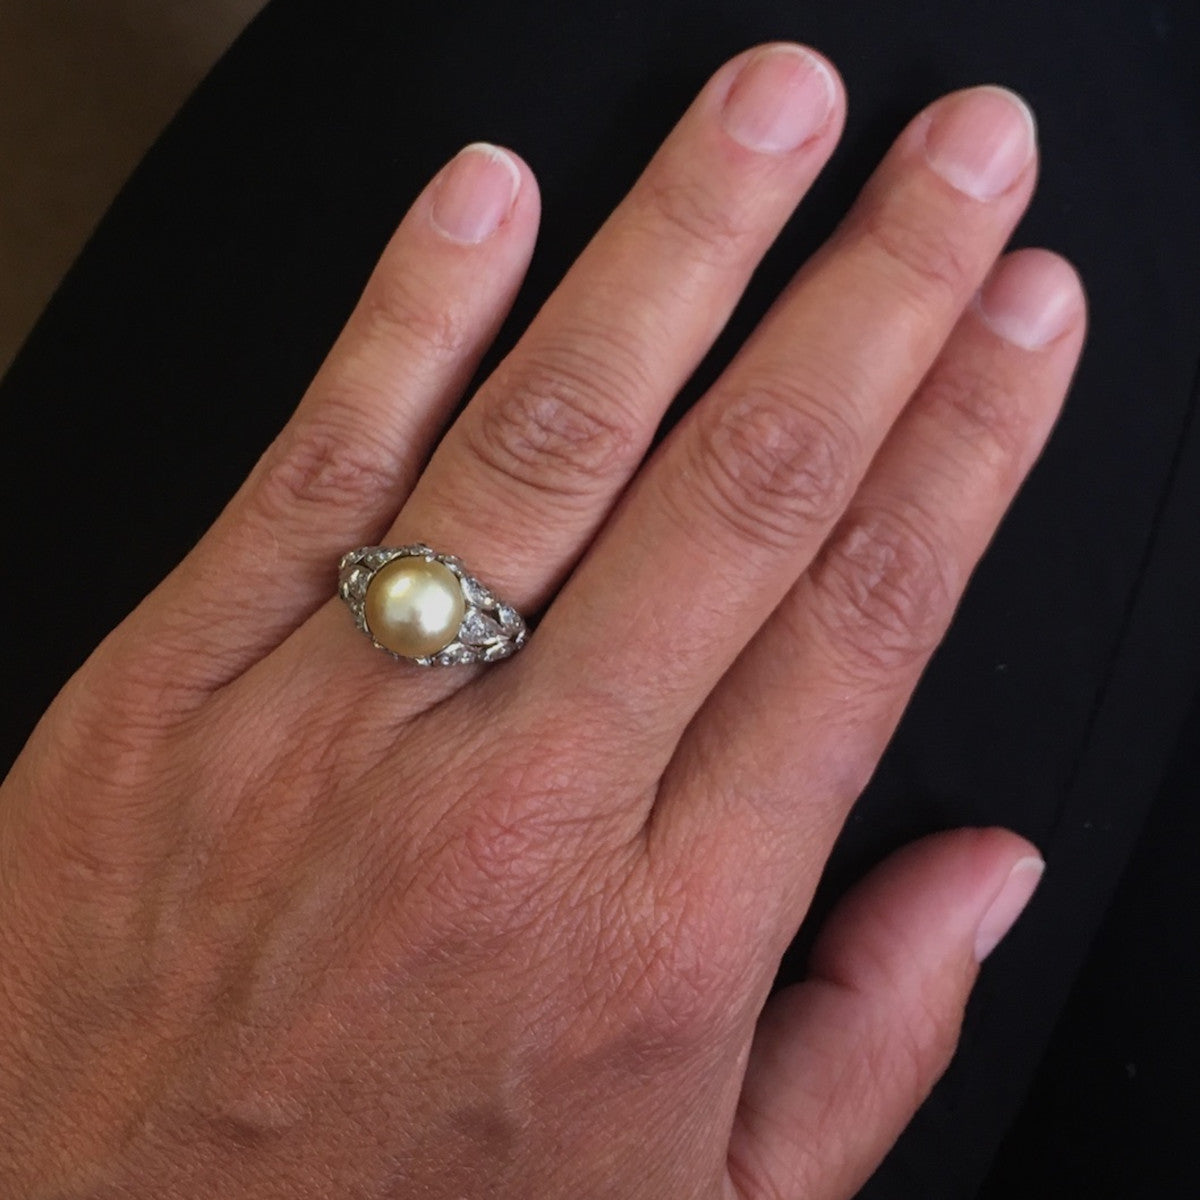 Edwardian Platinum & 18KT Yellow Gold Natural Pearl & Diamond Ring on finger